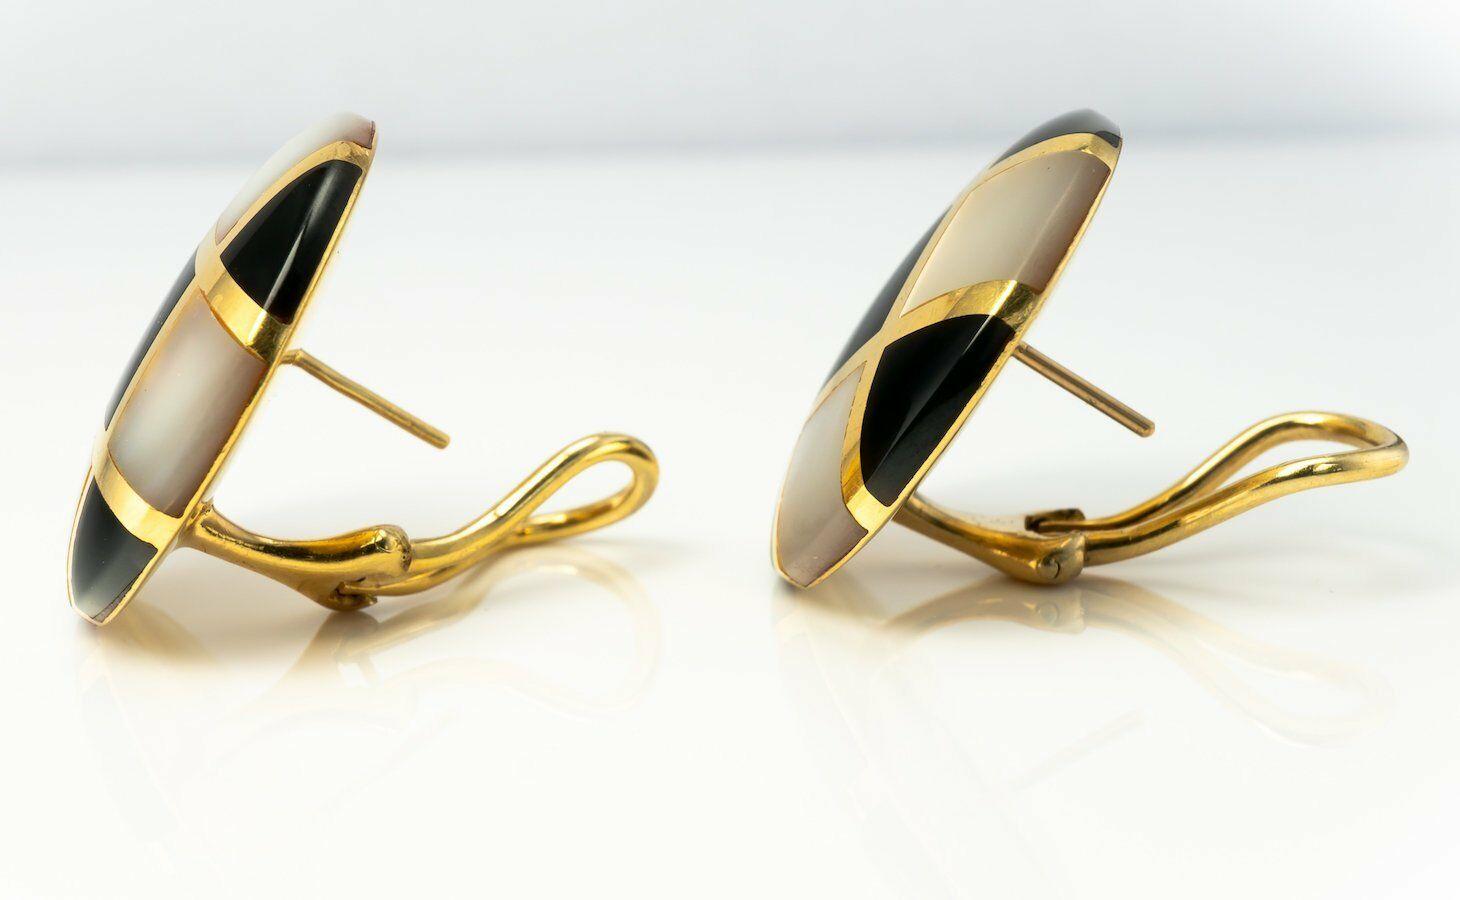 tiffany black onyx earrings